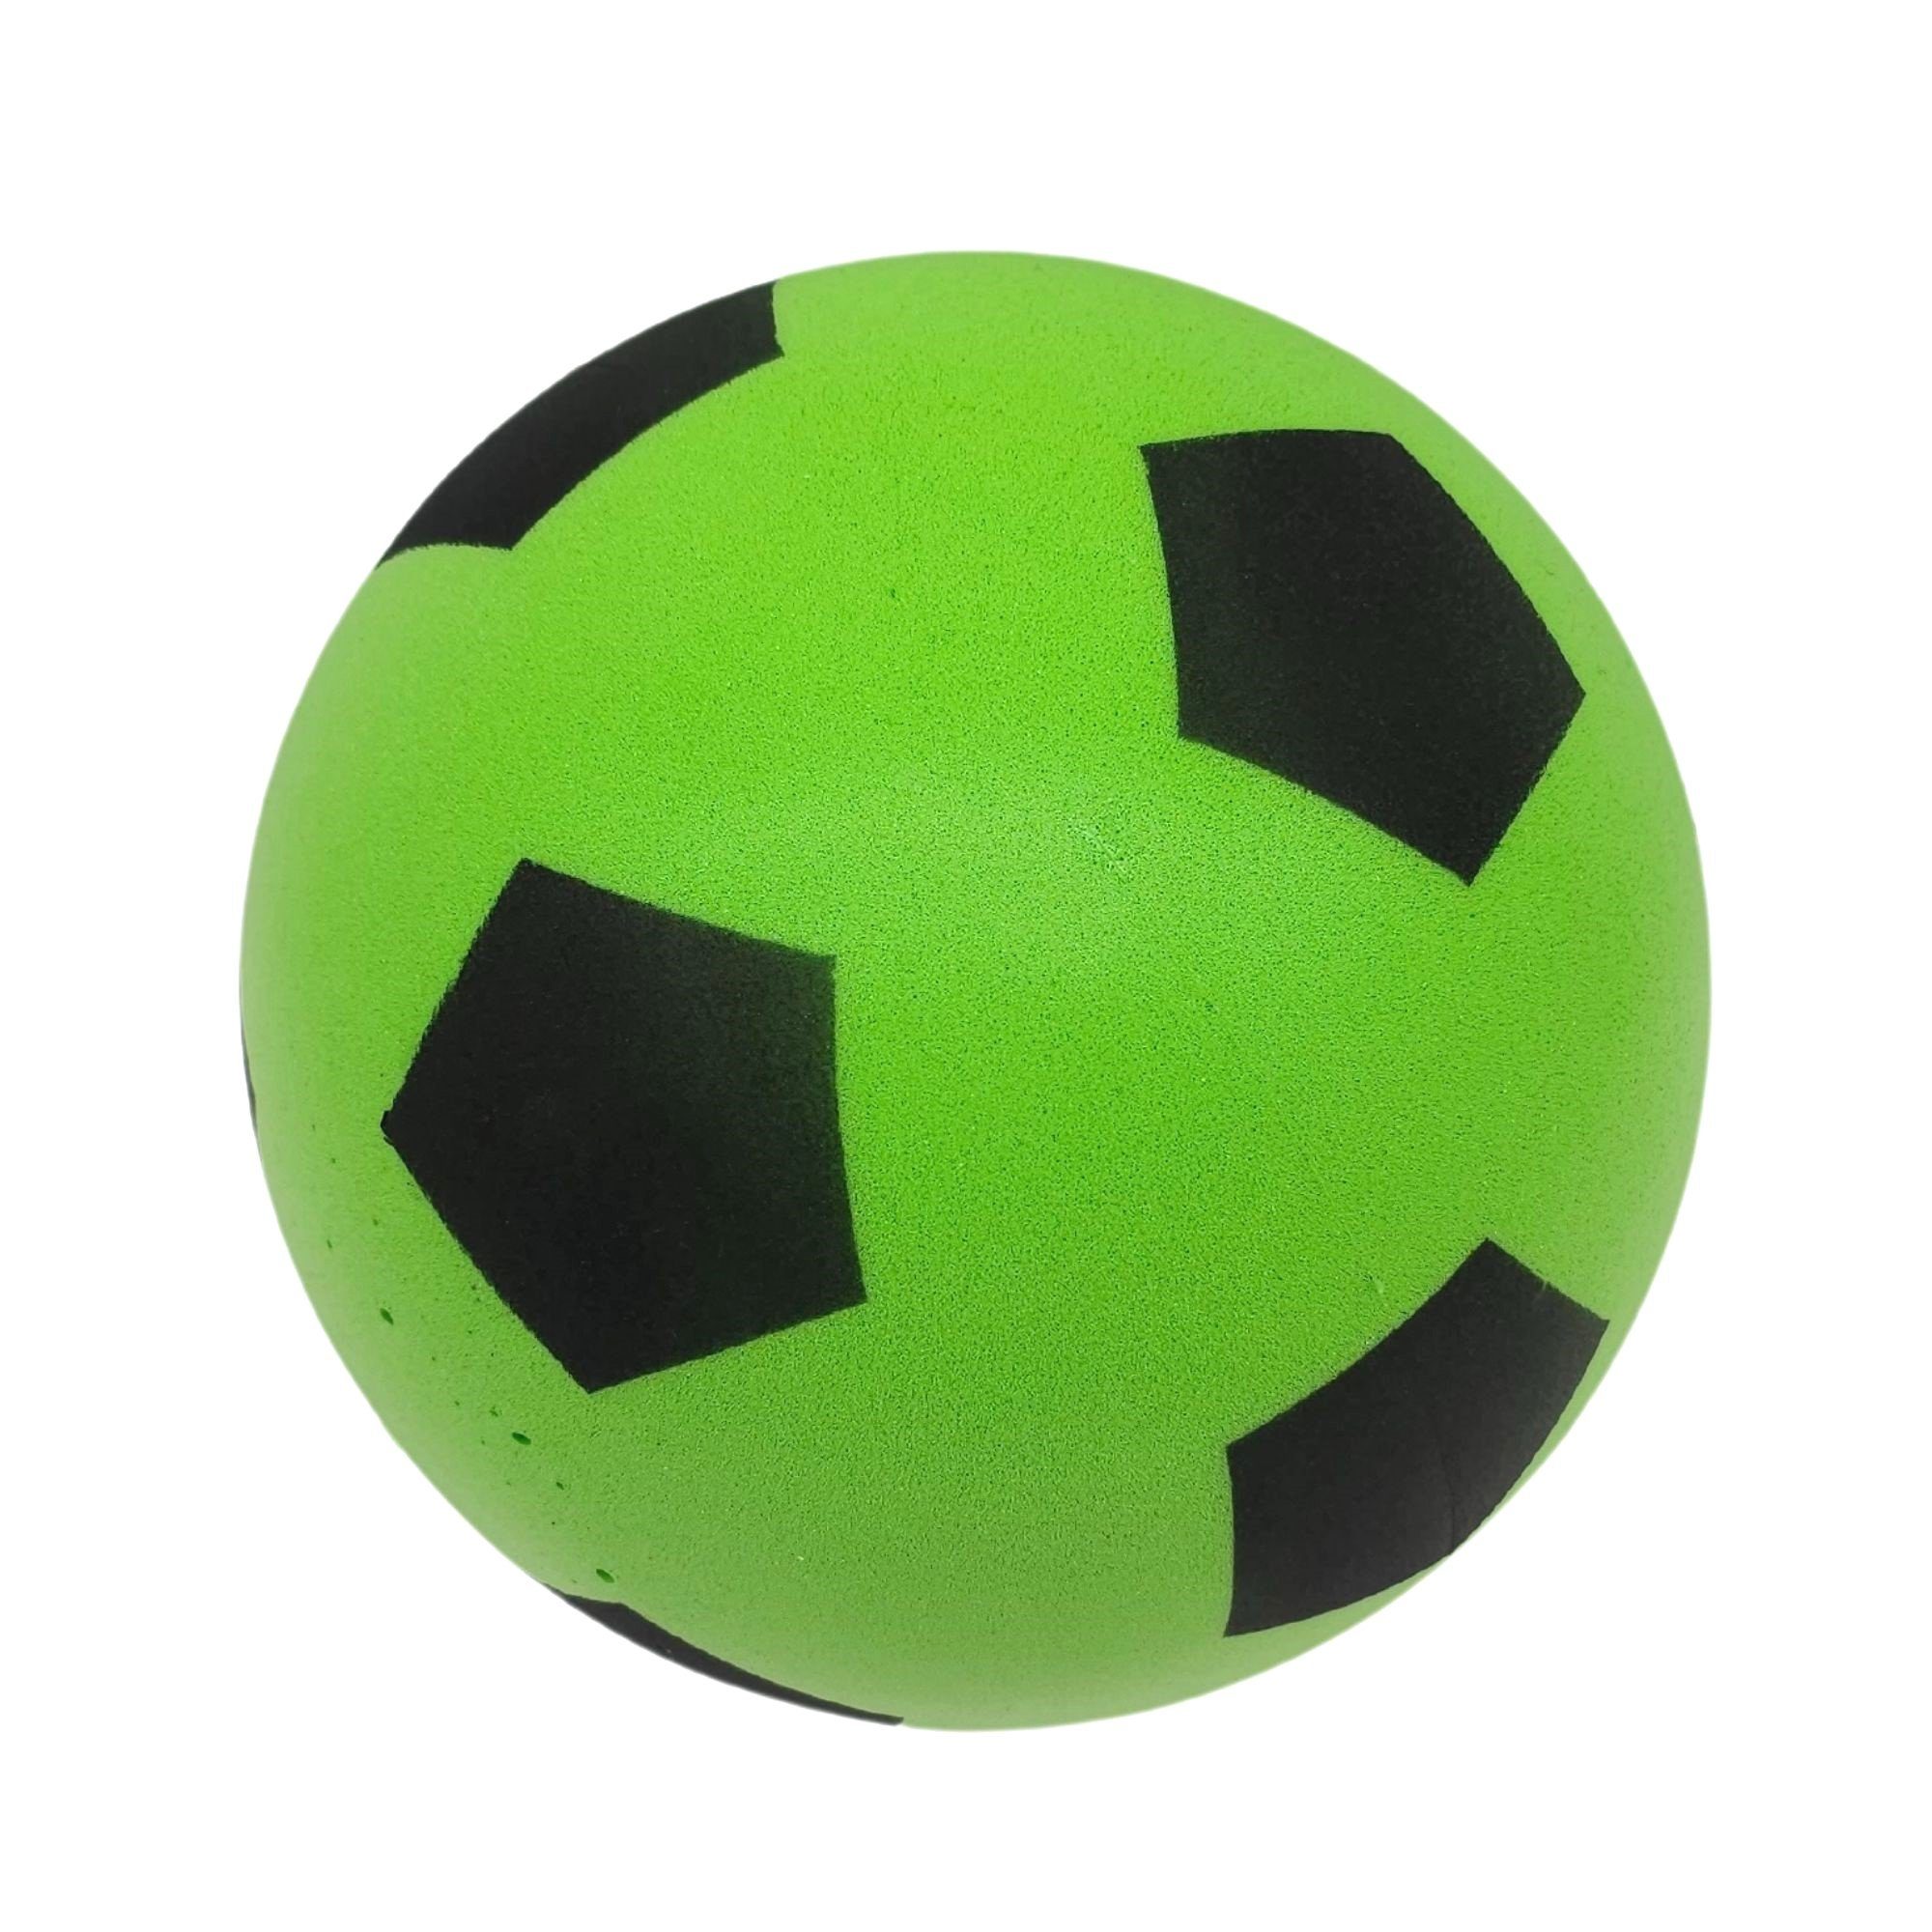 alldoro Softball 63104, Schaumstoffball grün Ø 19 cm, weicher Ball aus Schaumstoff